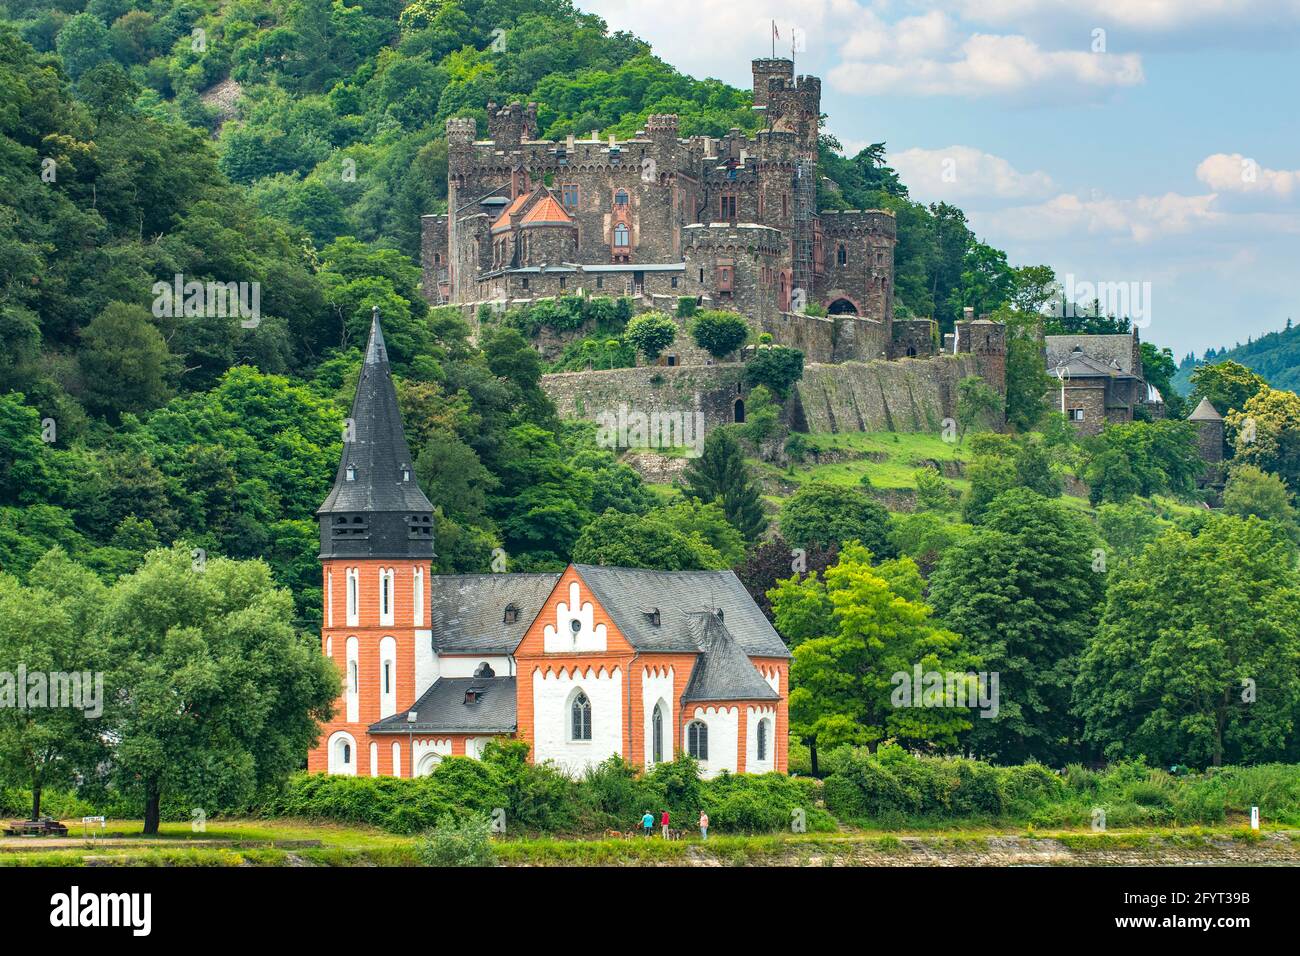 St Clements Kapelle and Burg Rheinstein, Trechtinghausen, Germany Stock Photo